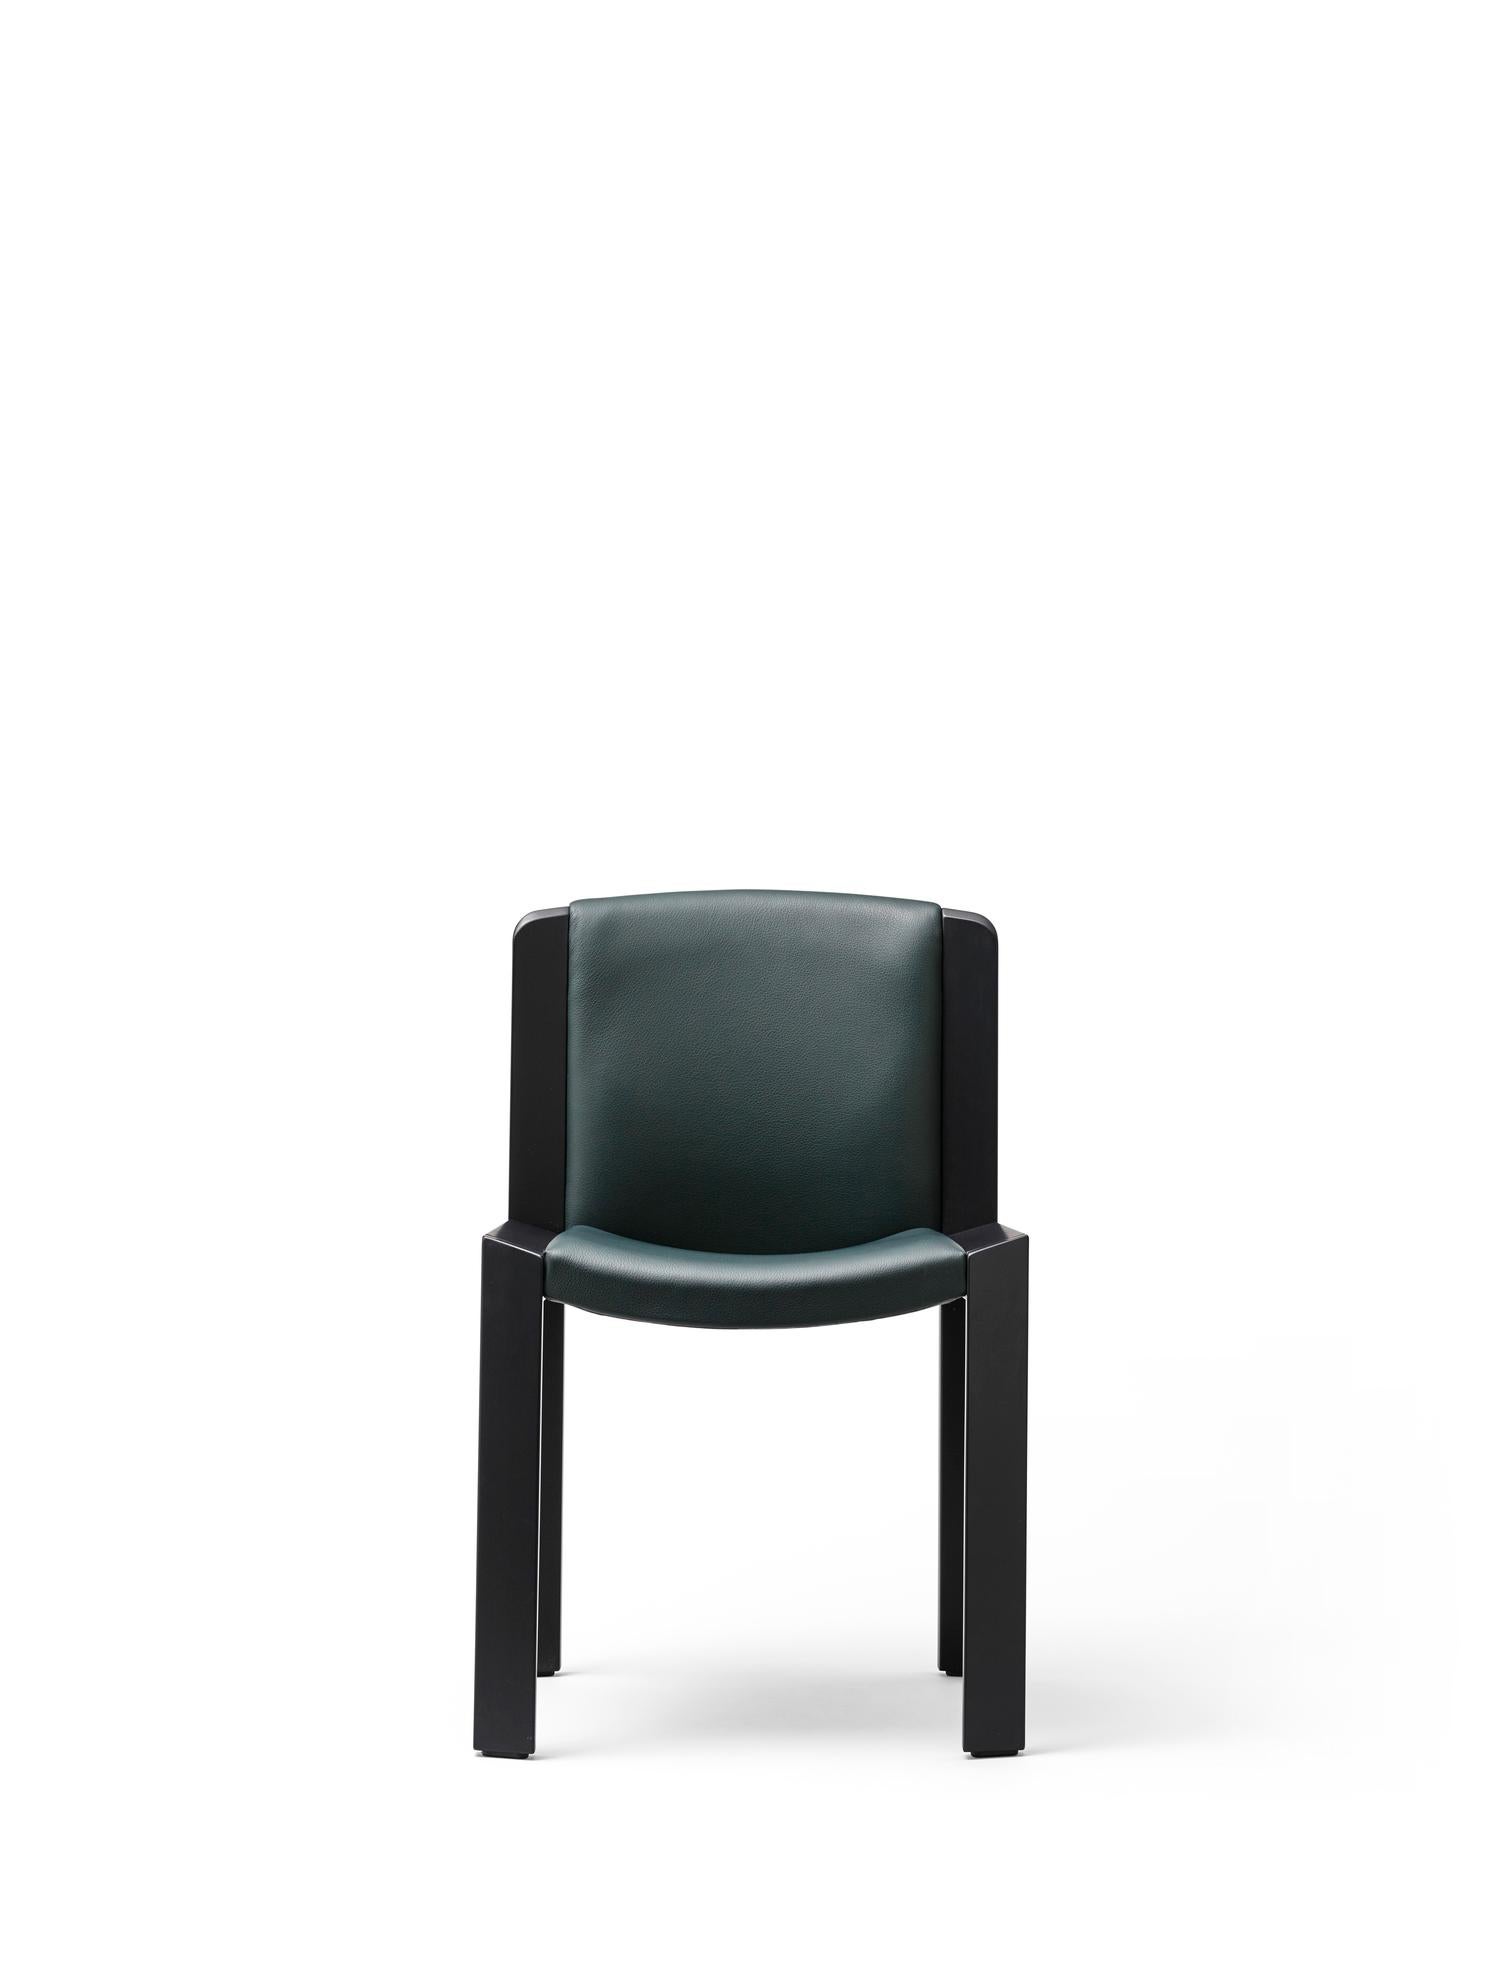 Danish Set of Six Joe Colombo 'Chair 300' Wood and Sørensen Leather by Karakter